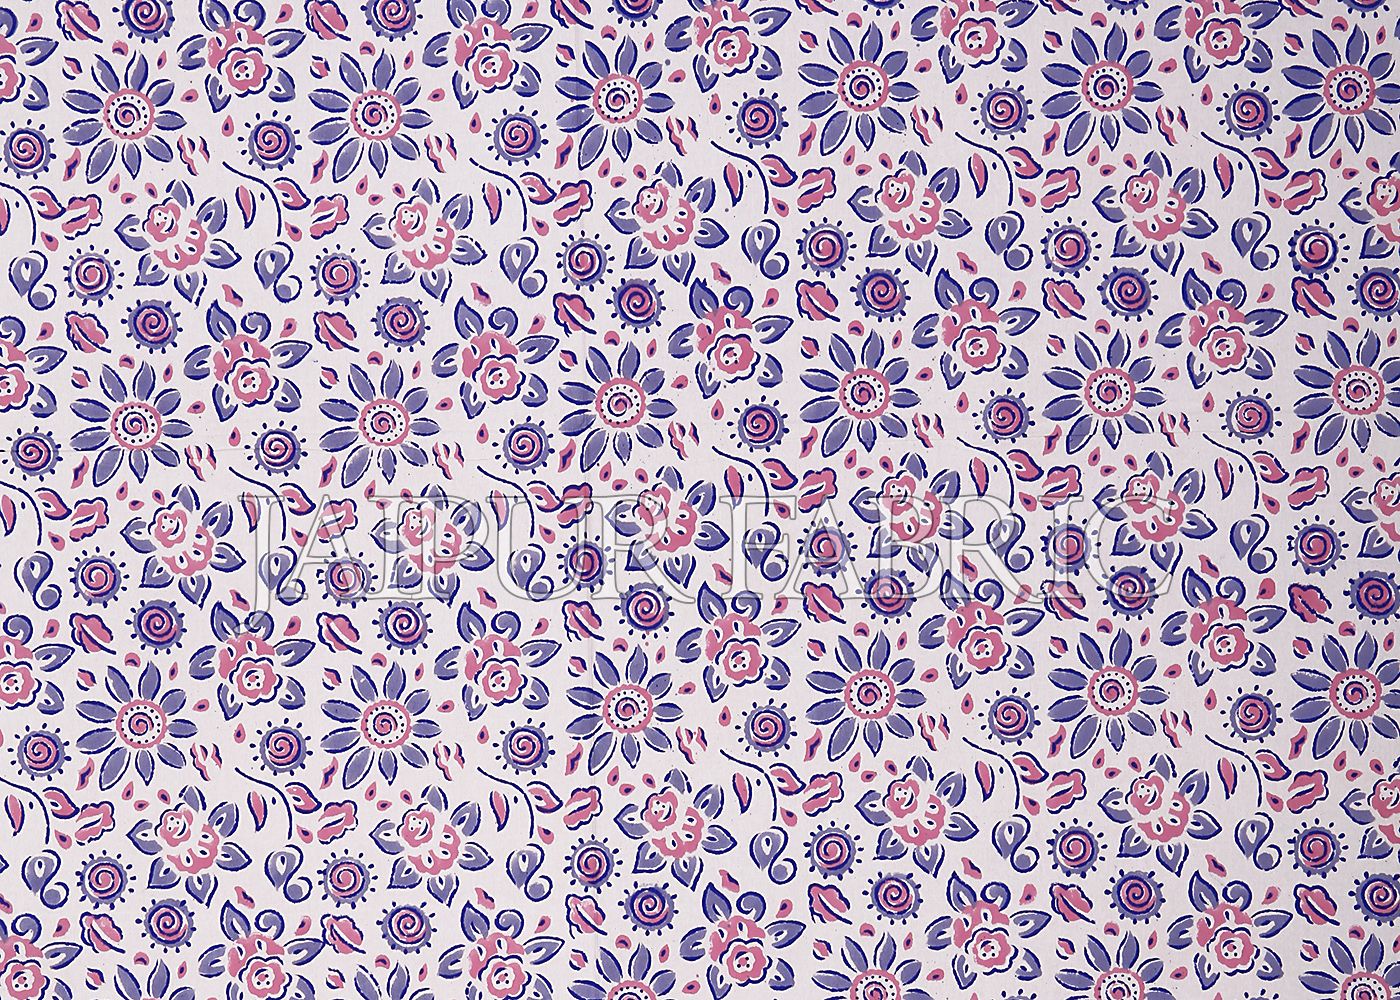 Blue Border White Base Flower Pattern Block Print Cotton Double Bed Sheet